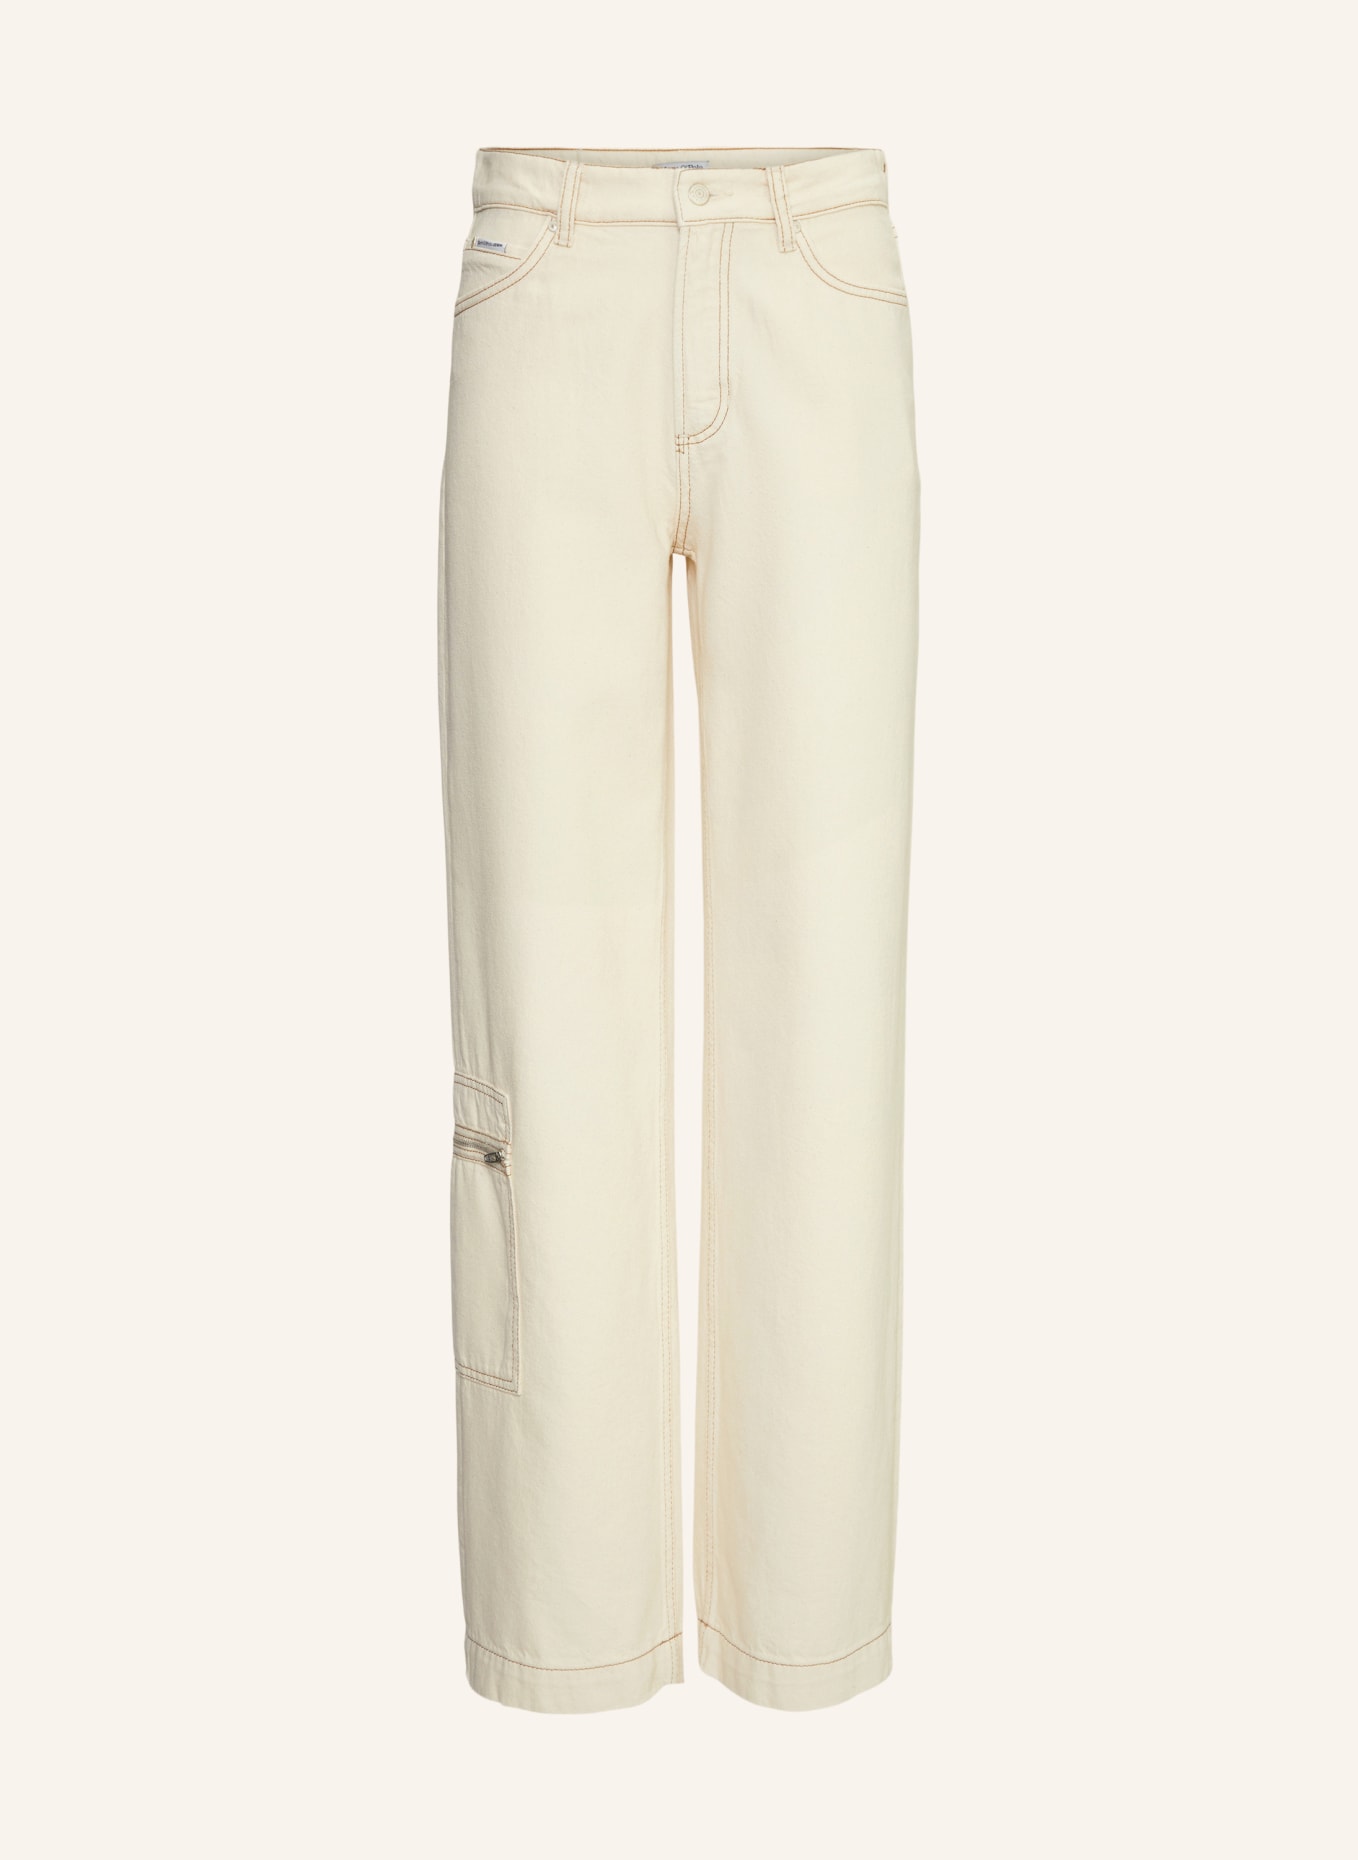 Marc O'Polo DENIM Jeans Modell TOMMA, Farbe: BEIGE (Bild 1)